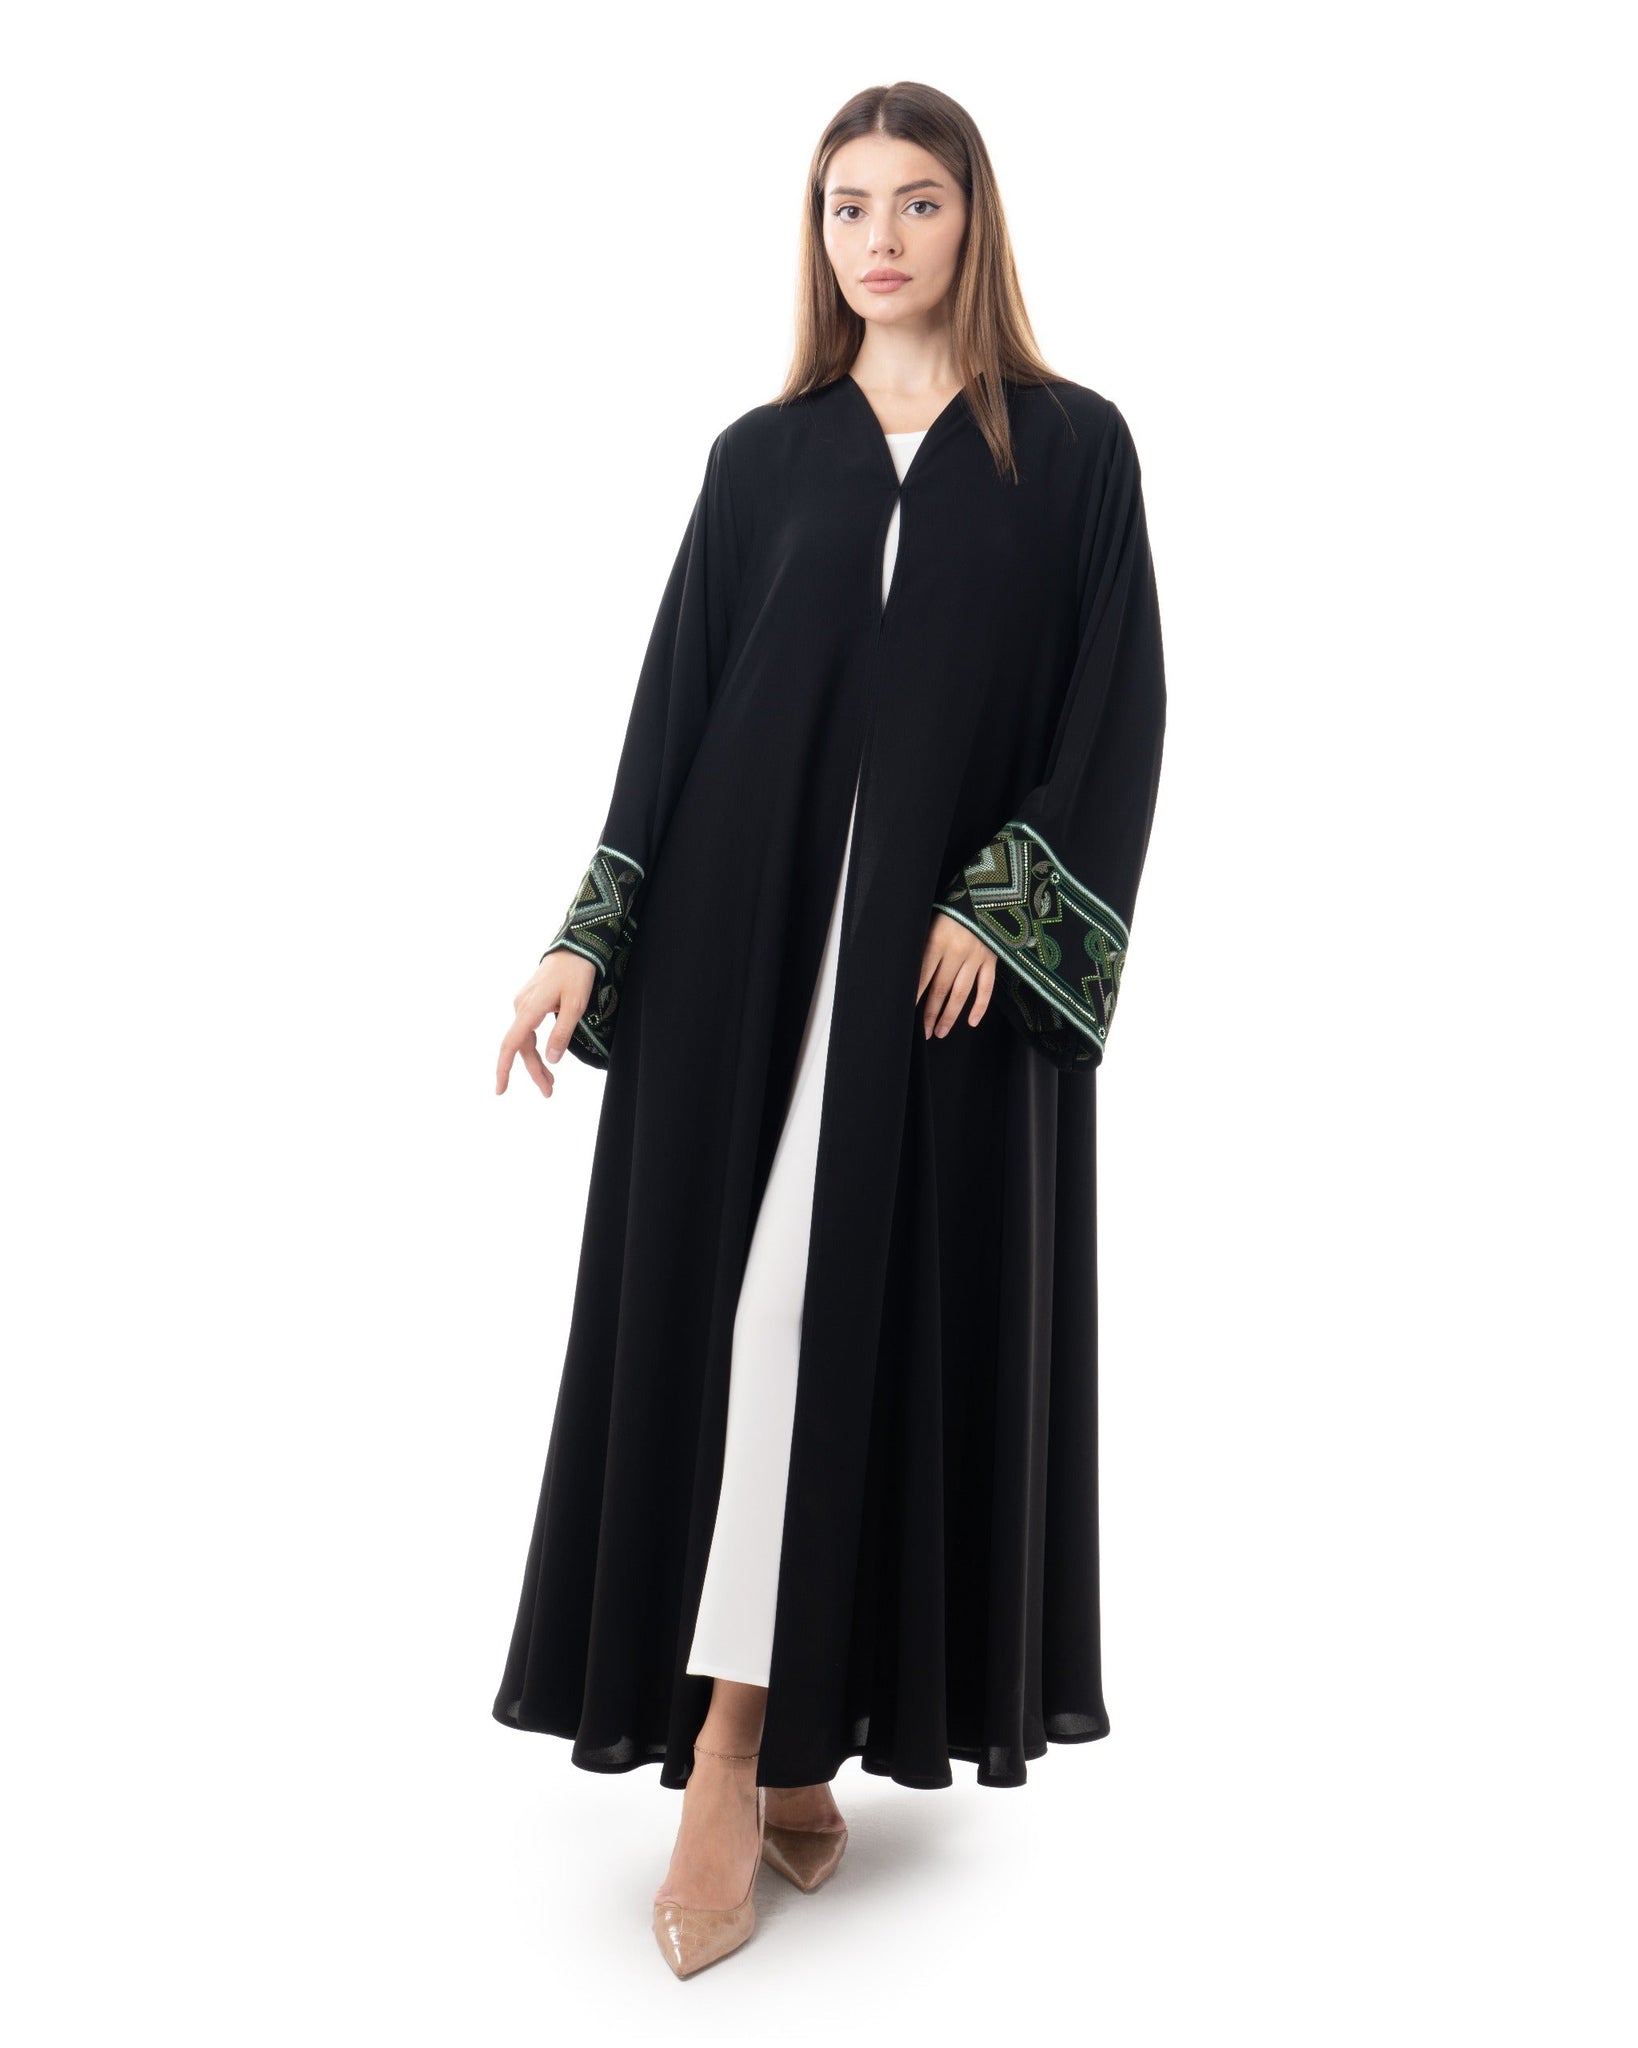 Hanayen Elegant Black Abaya with Green Embroidered Cuffs